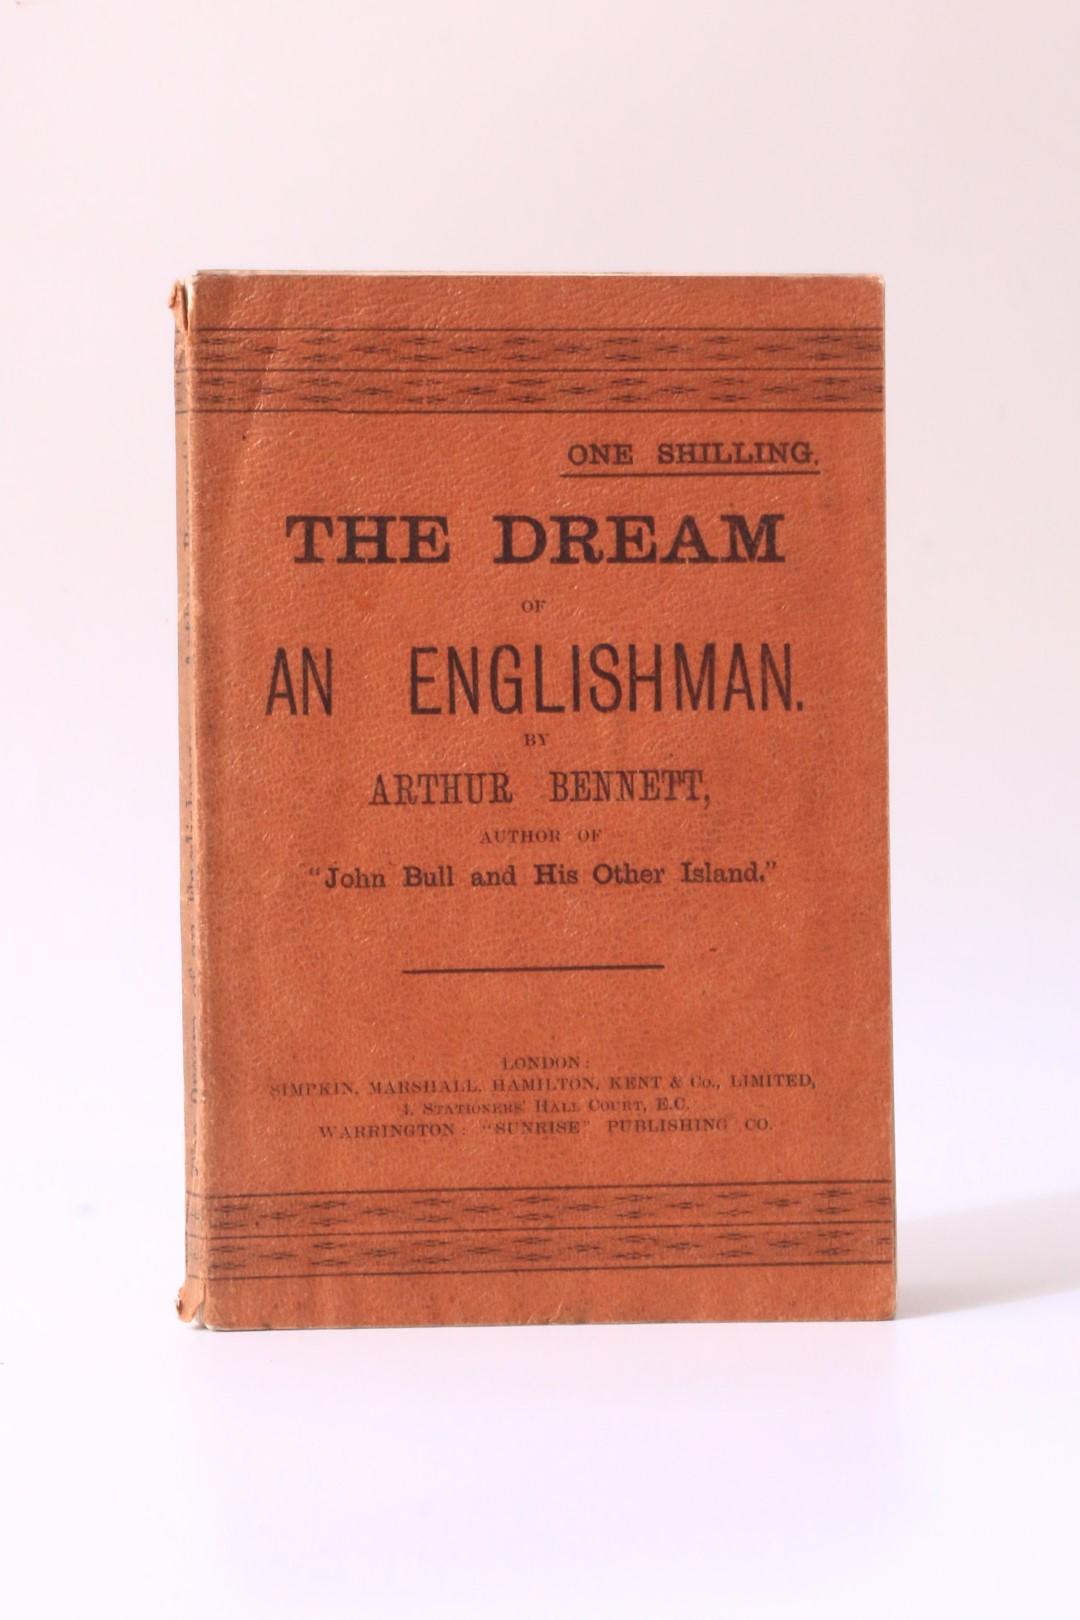 Arthur Bennett - The Dream of an Englishman - Sunrise Publishing Co., 1893, First Edition.